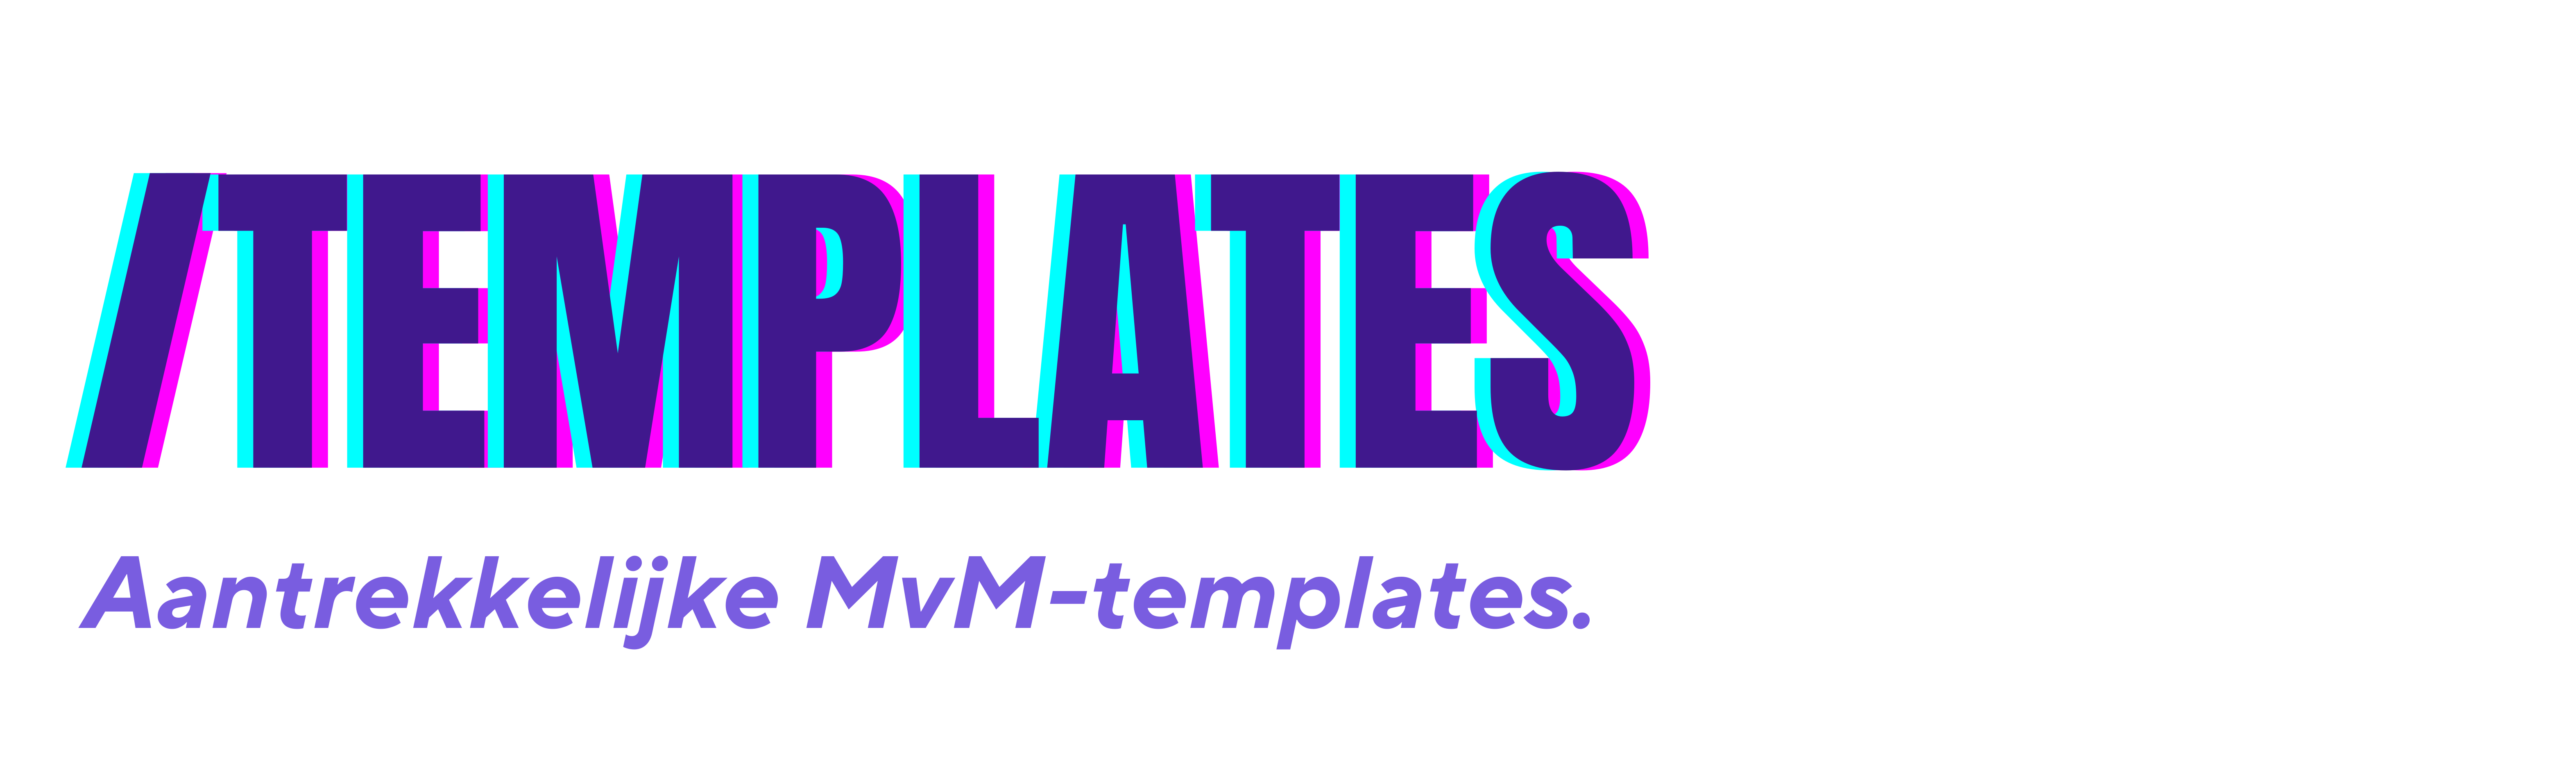 templates